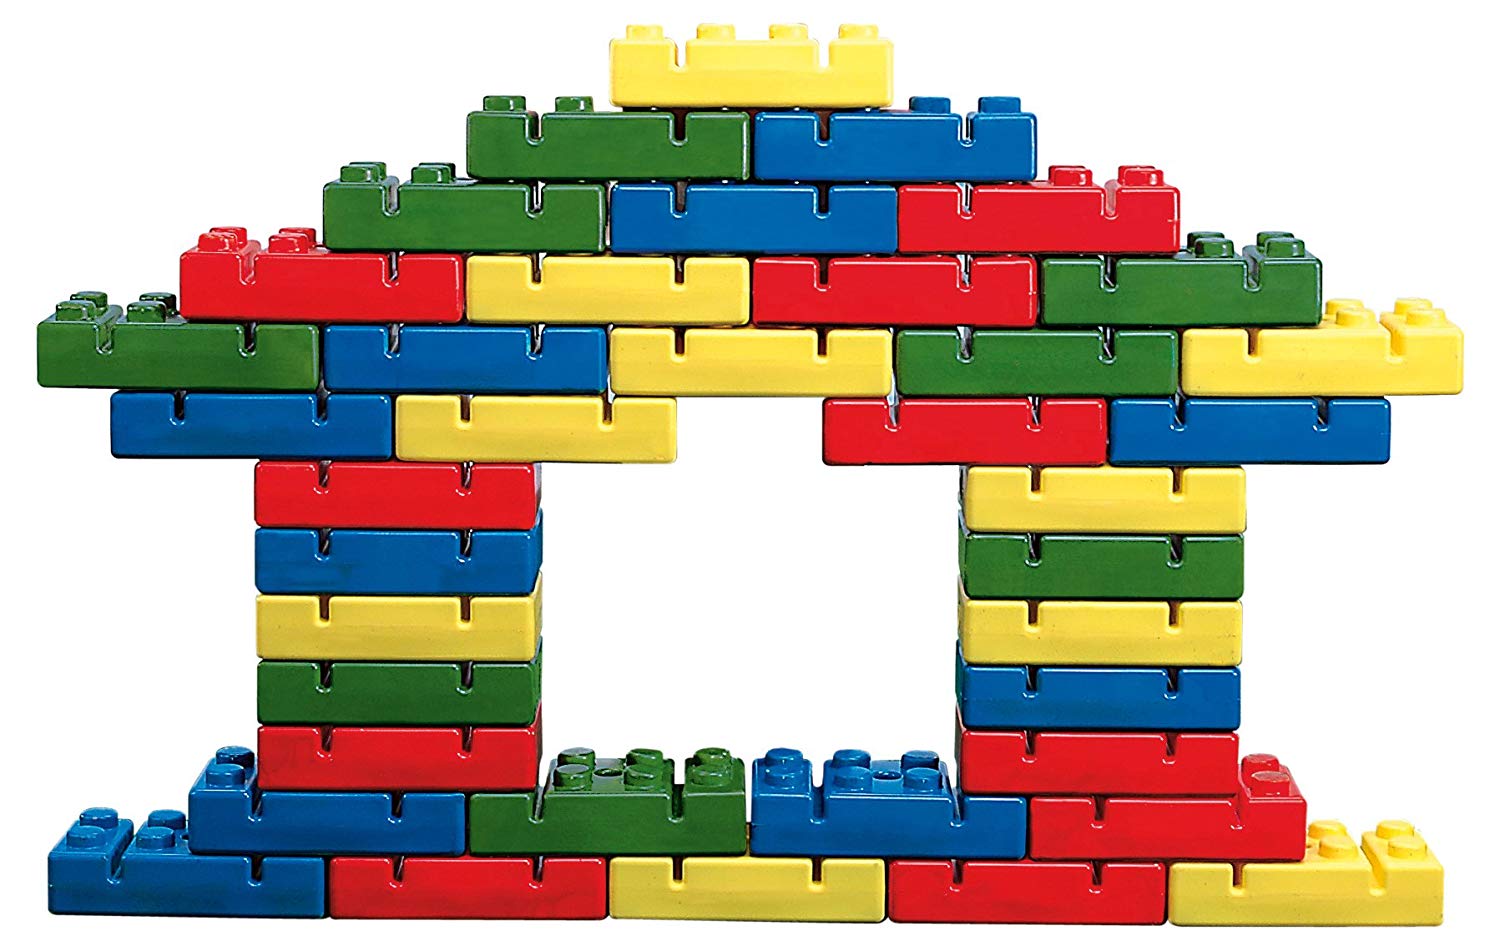 Italveneta Didattica 019 - Brick For Children, Red/Yellow/Blue/Green